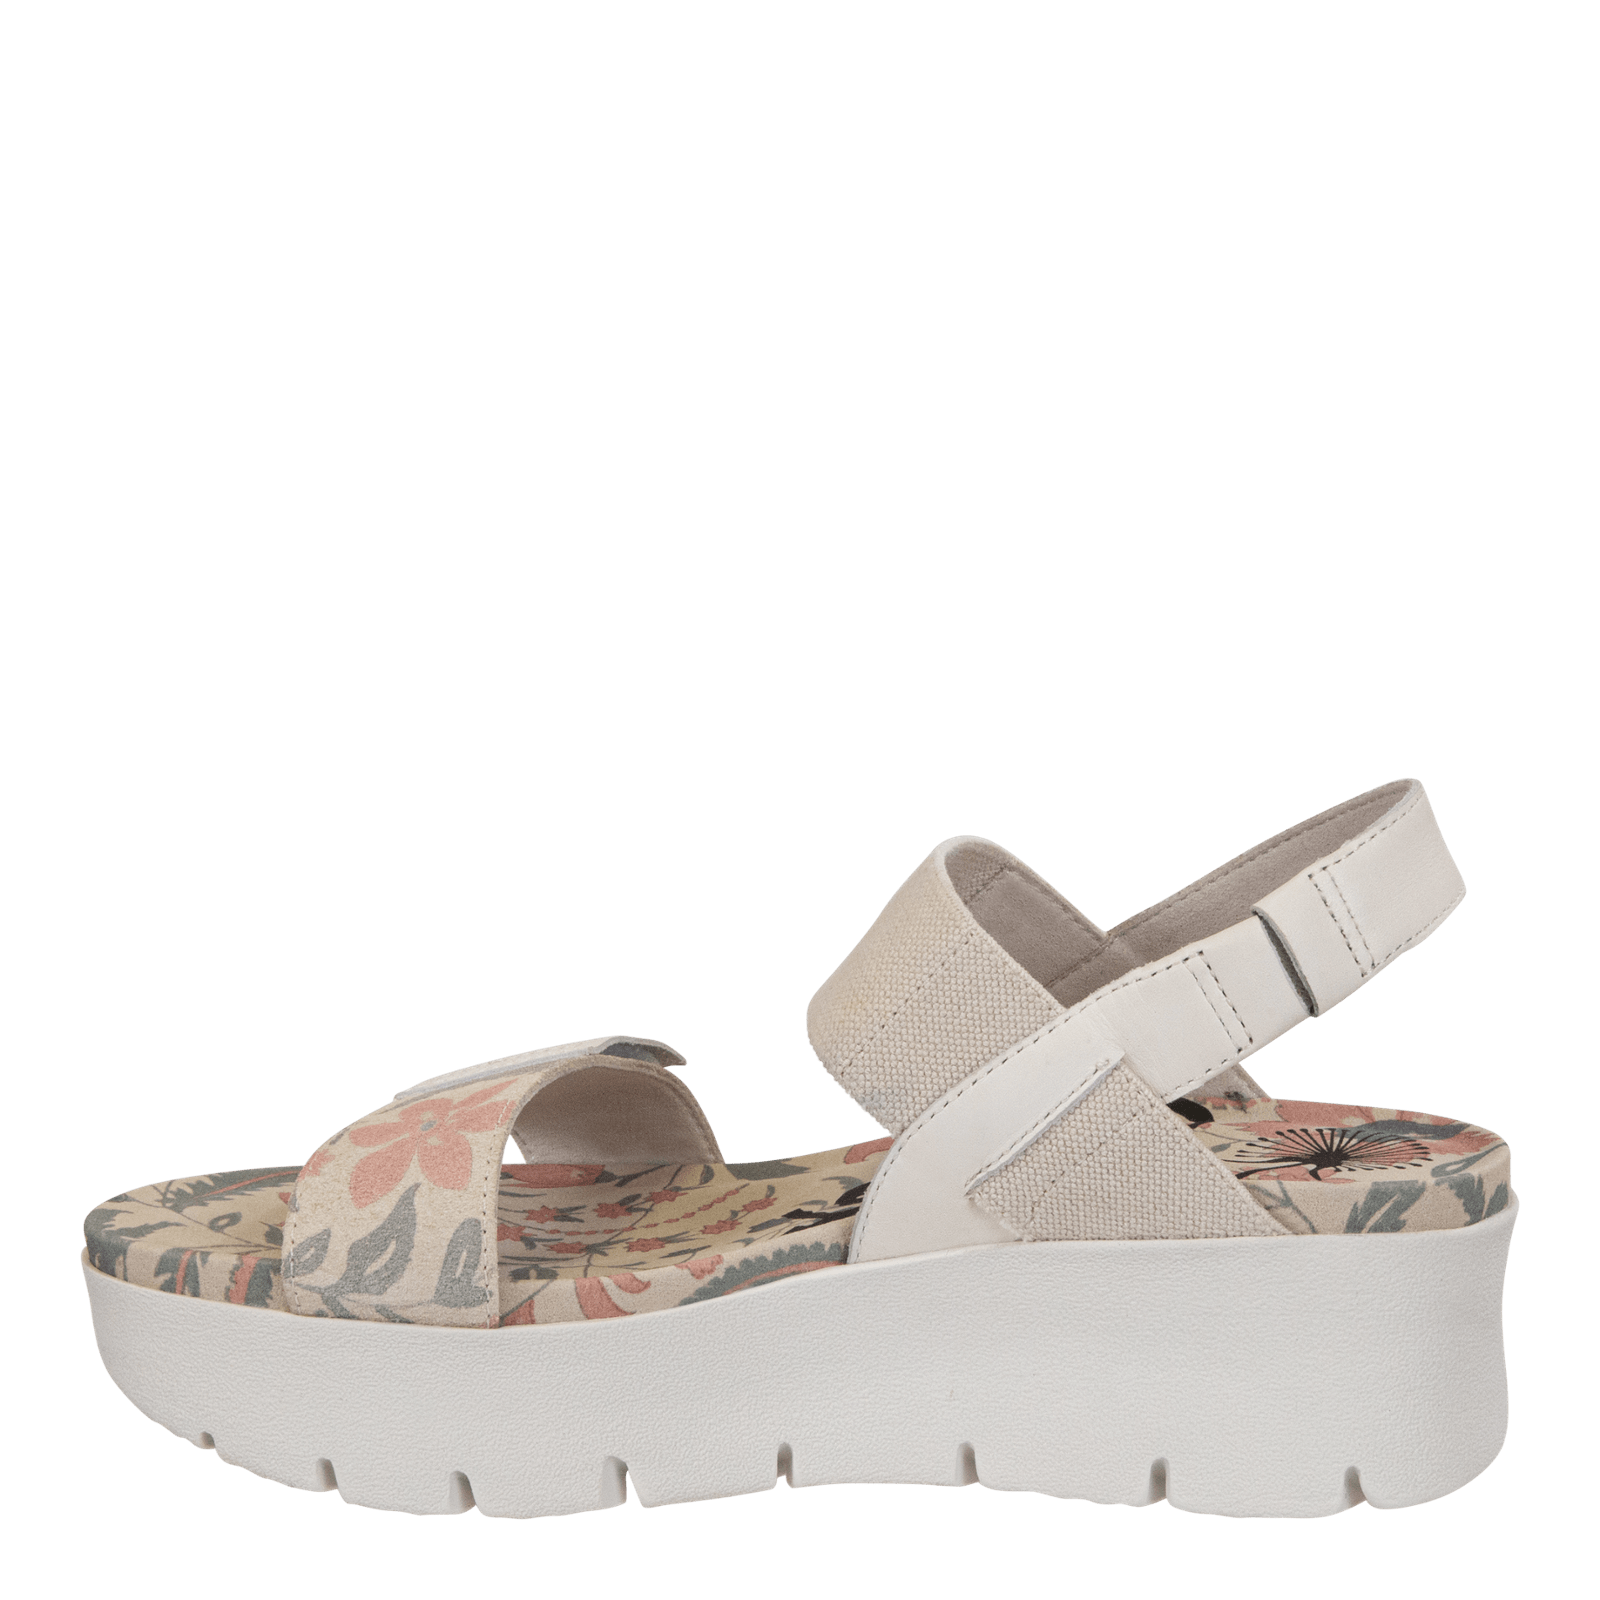 NOVA in KHAKI FLORAL Platform Sandals